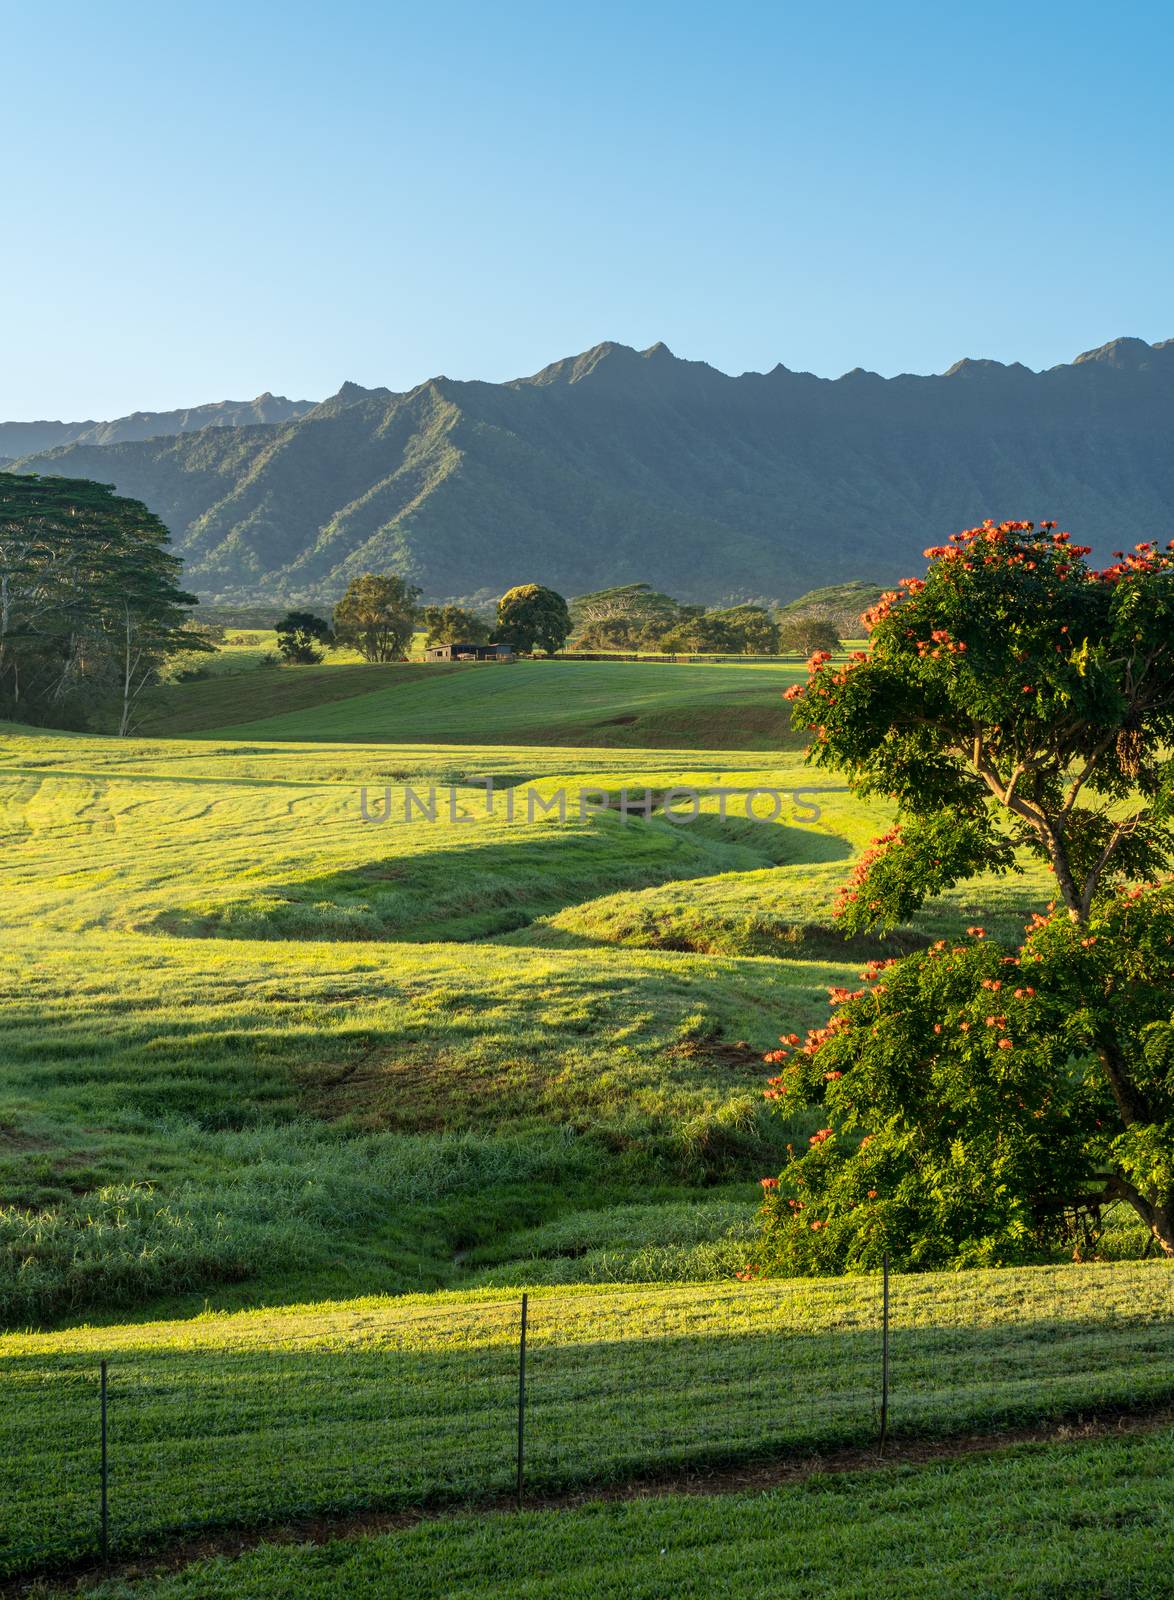 Striking landscape of Jurassic garden island of Kauai by steheap